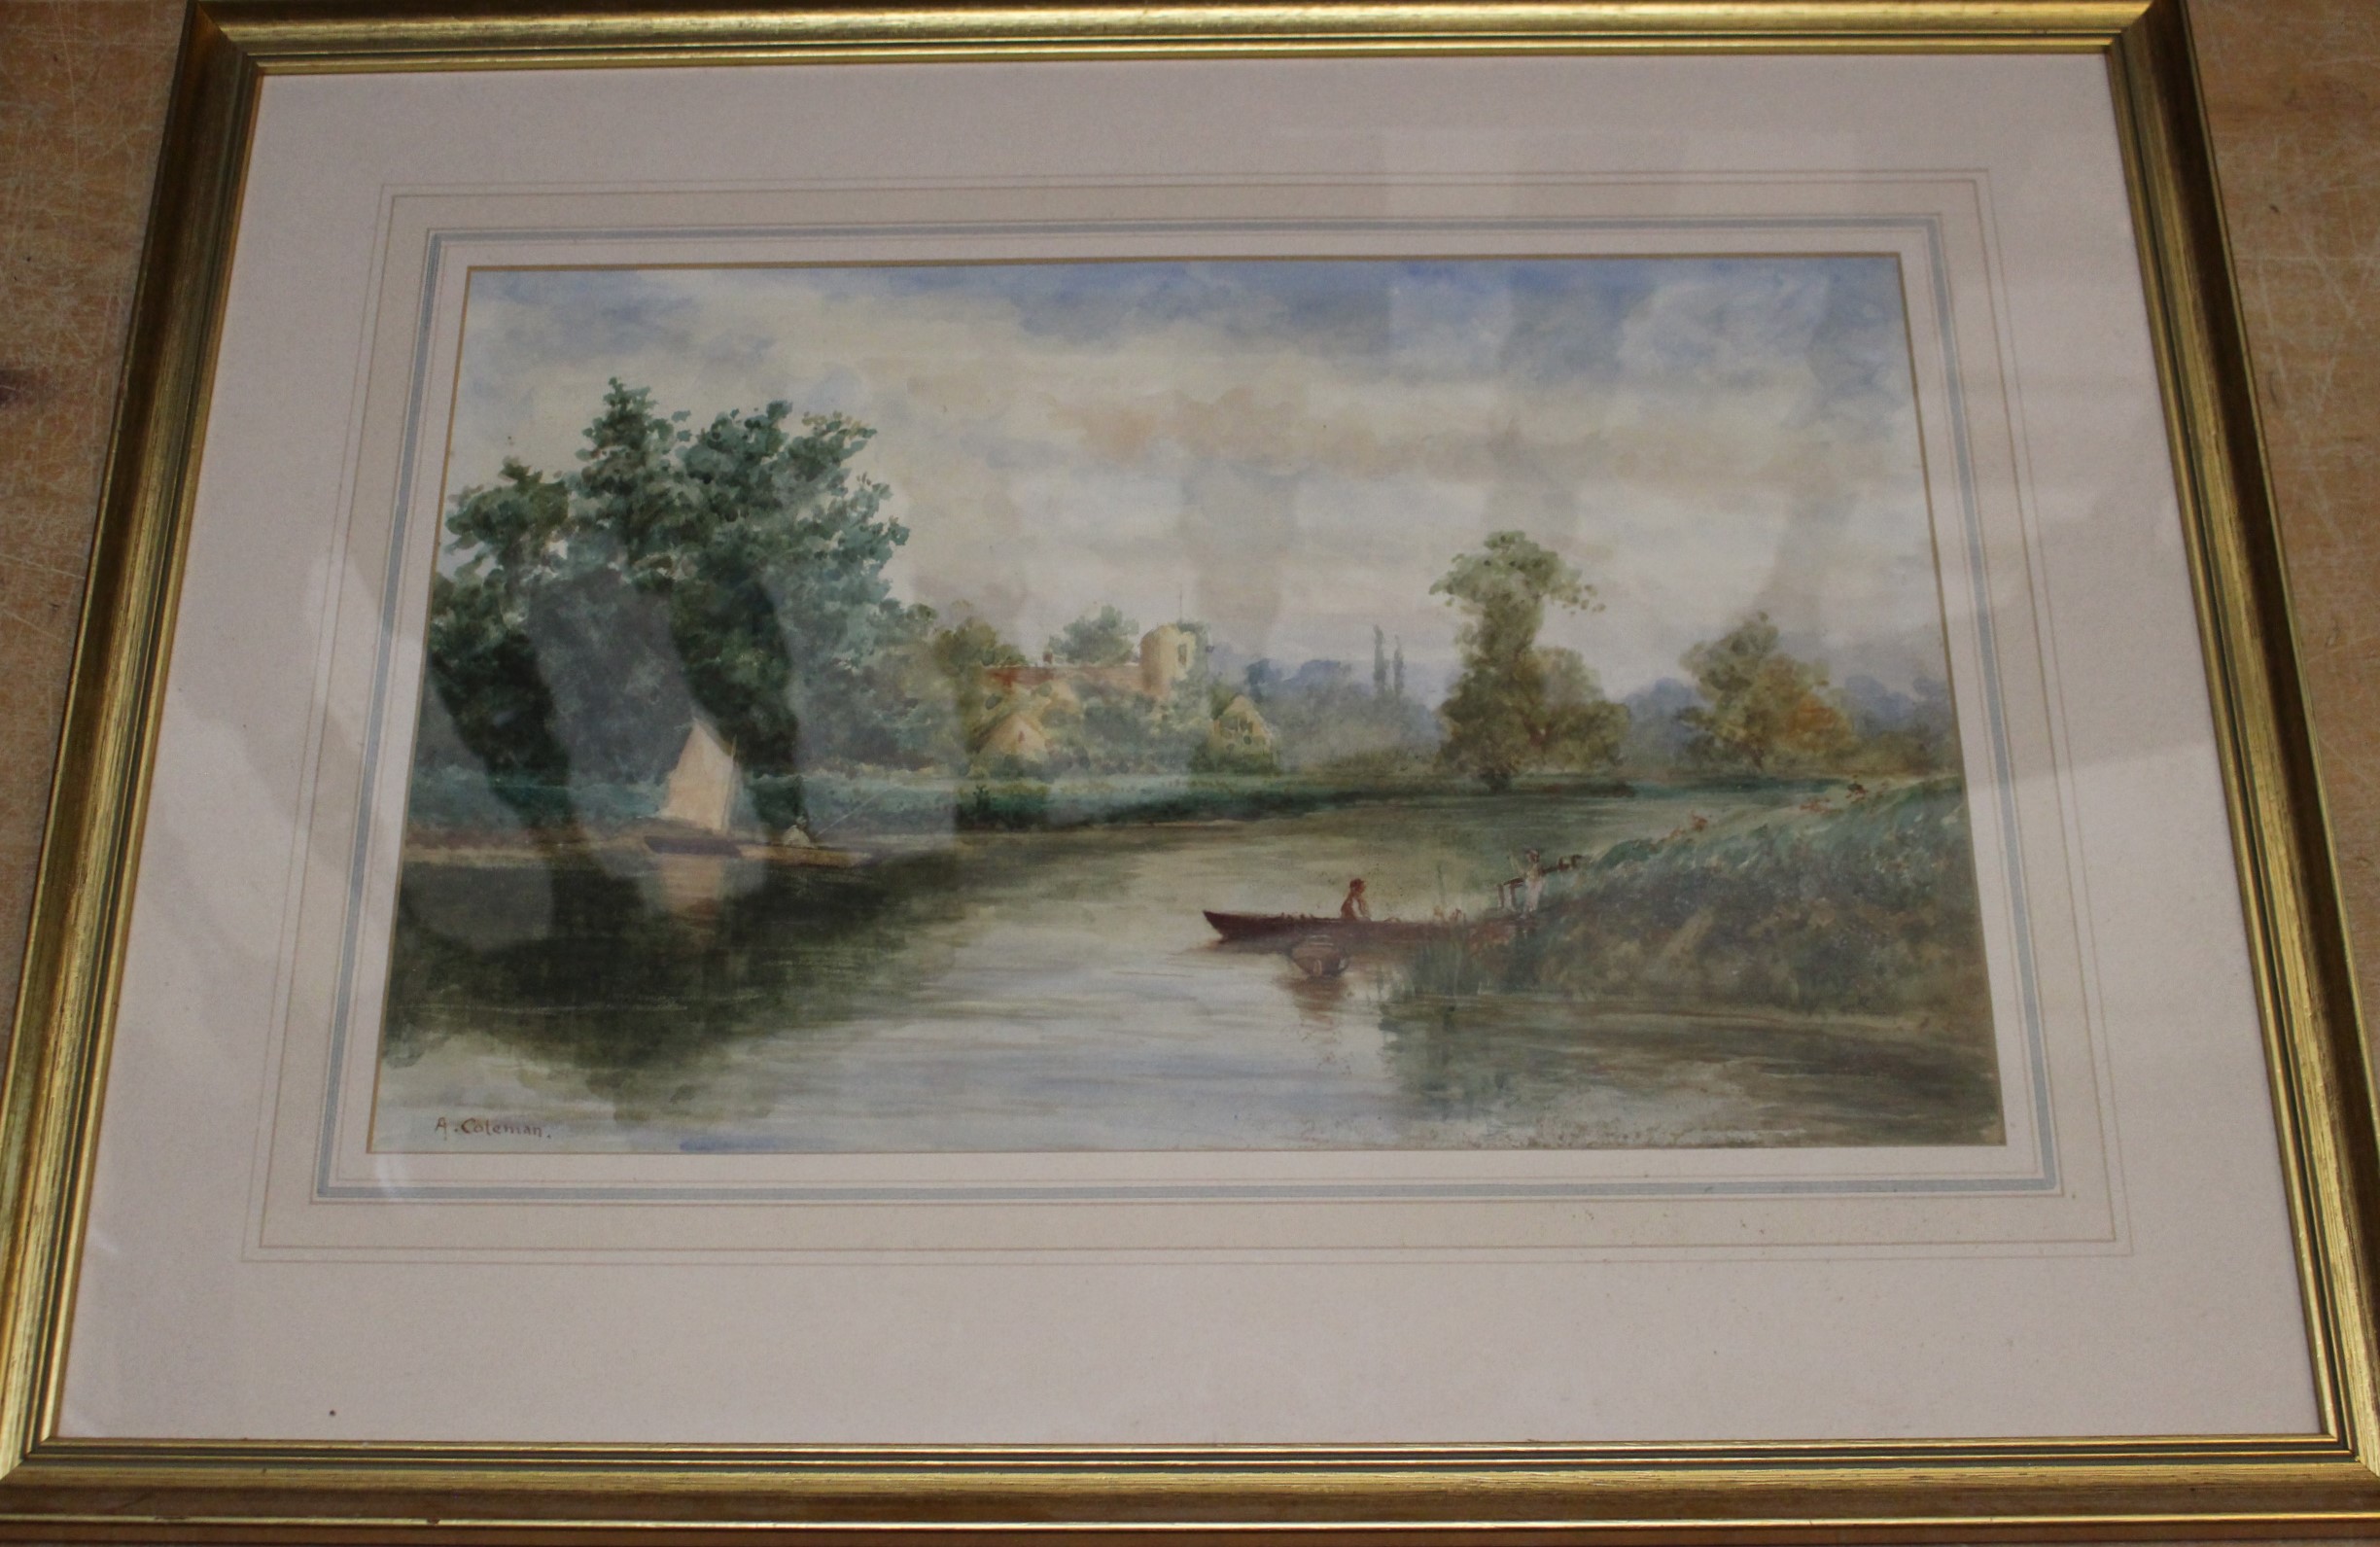 . A. Coleman  "On the Thames" Boating  Landscape.  Watercolour. Signed lower left   Gilt Framed Some